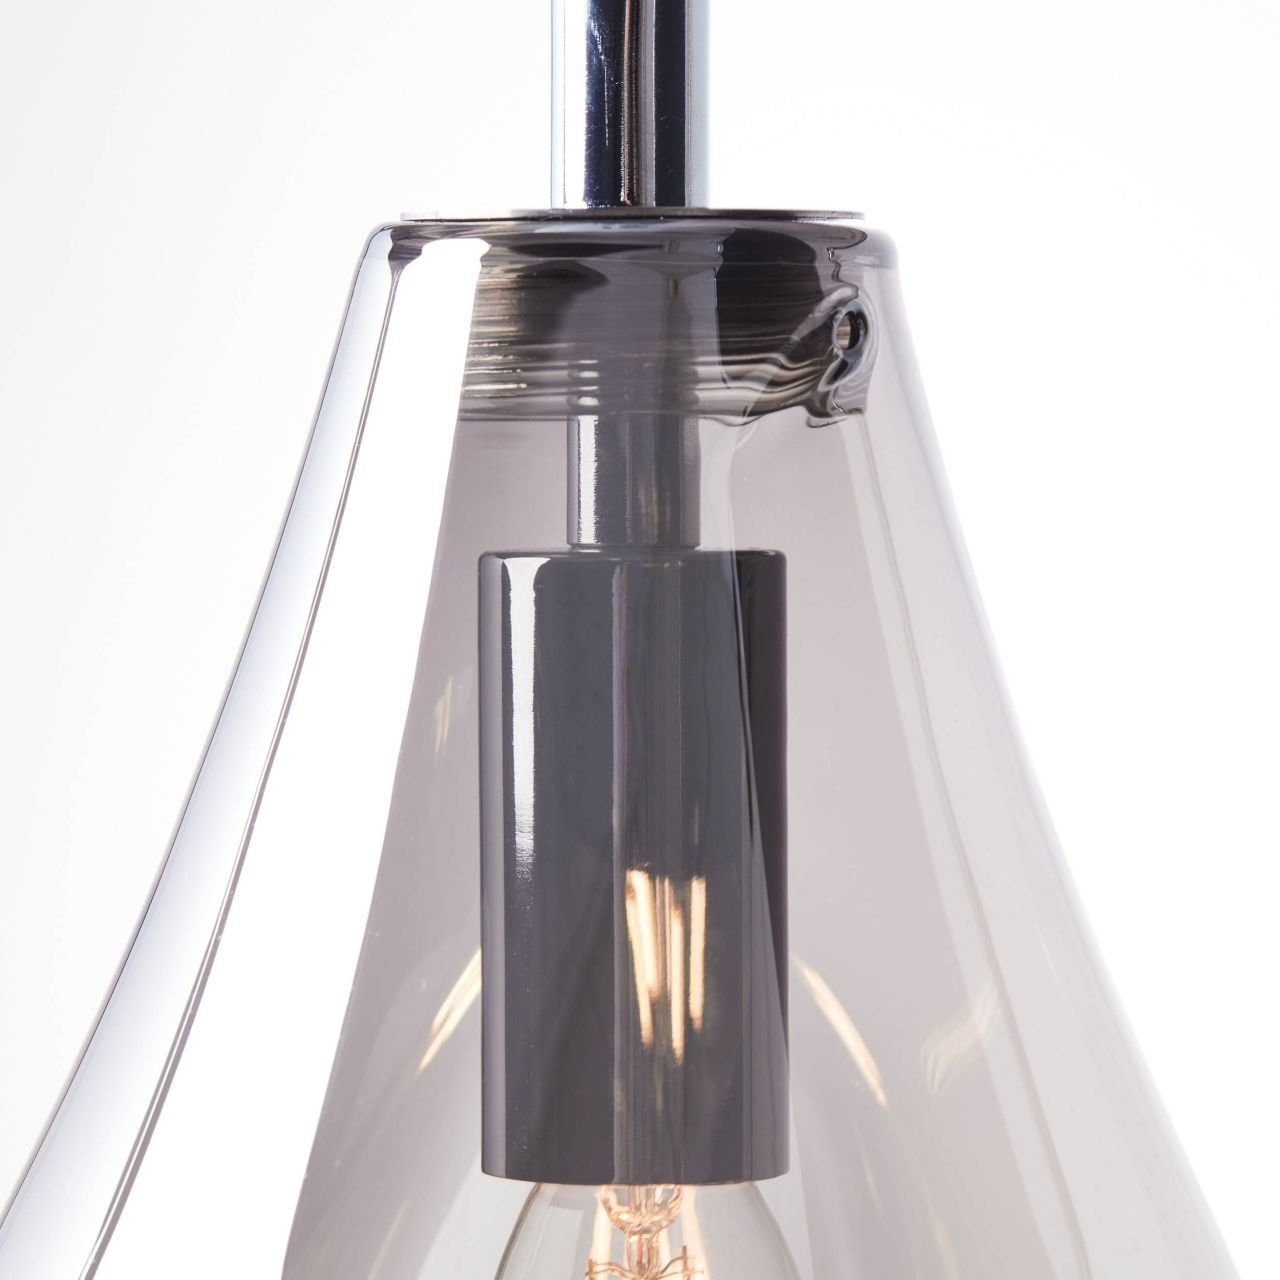 D45 Lampe, Drops, Brilliant rauchglas/chrom, Glas/Metall, Drops Pendelleuchte Pendelleuchte 1flg 1x